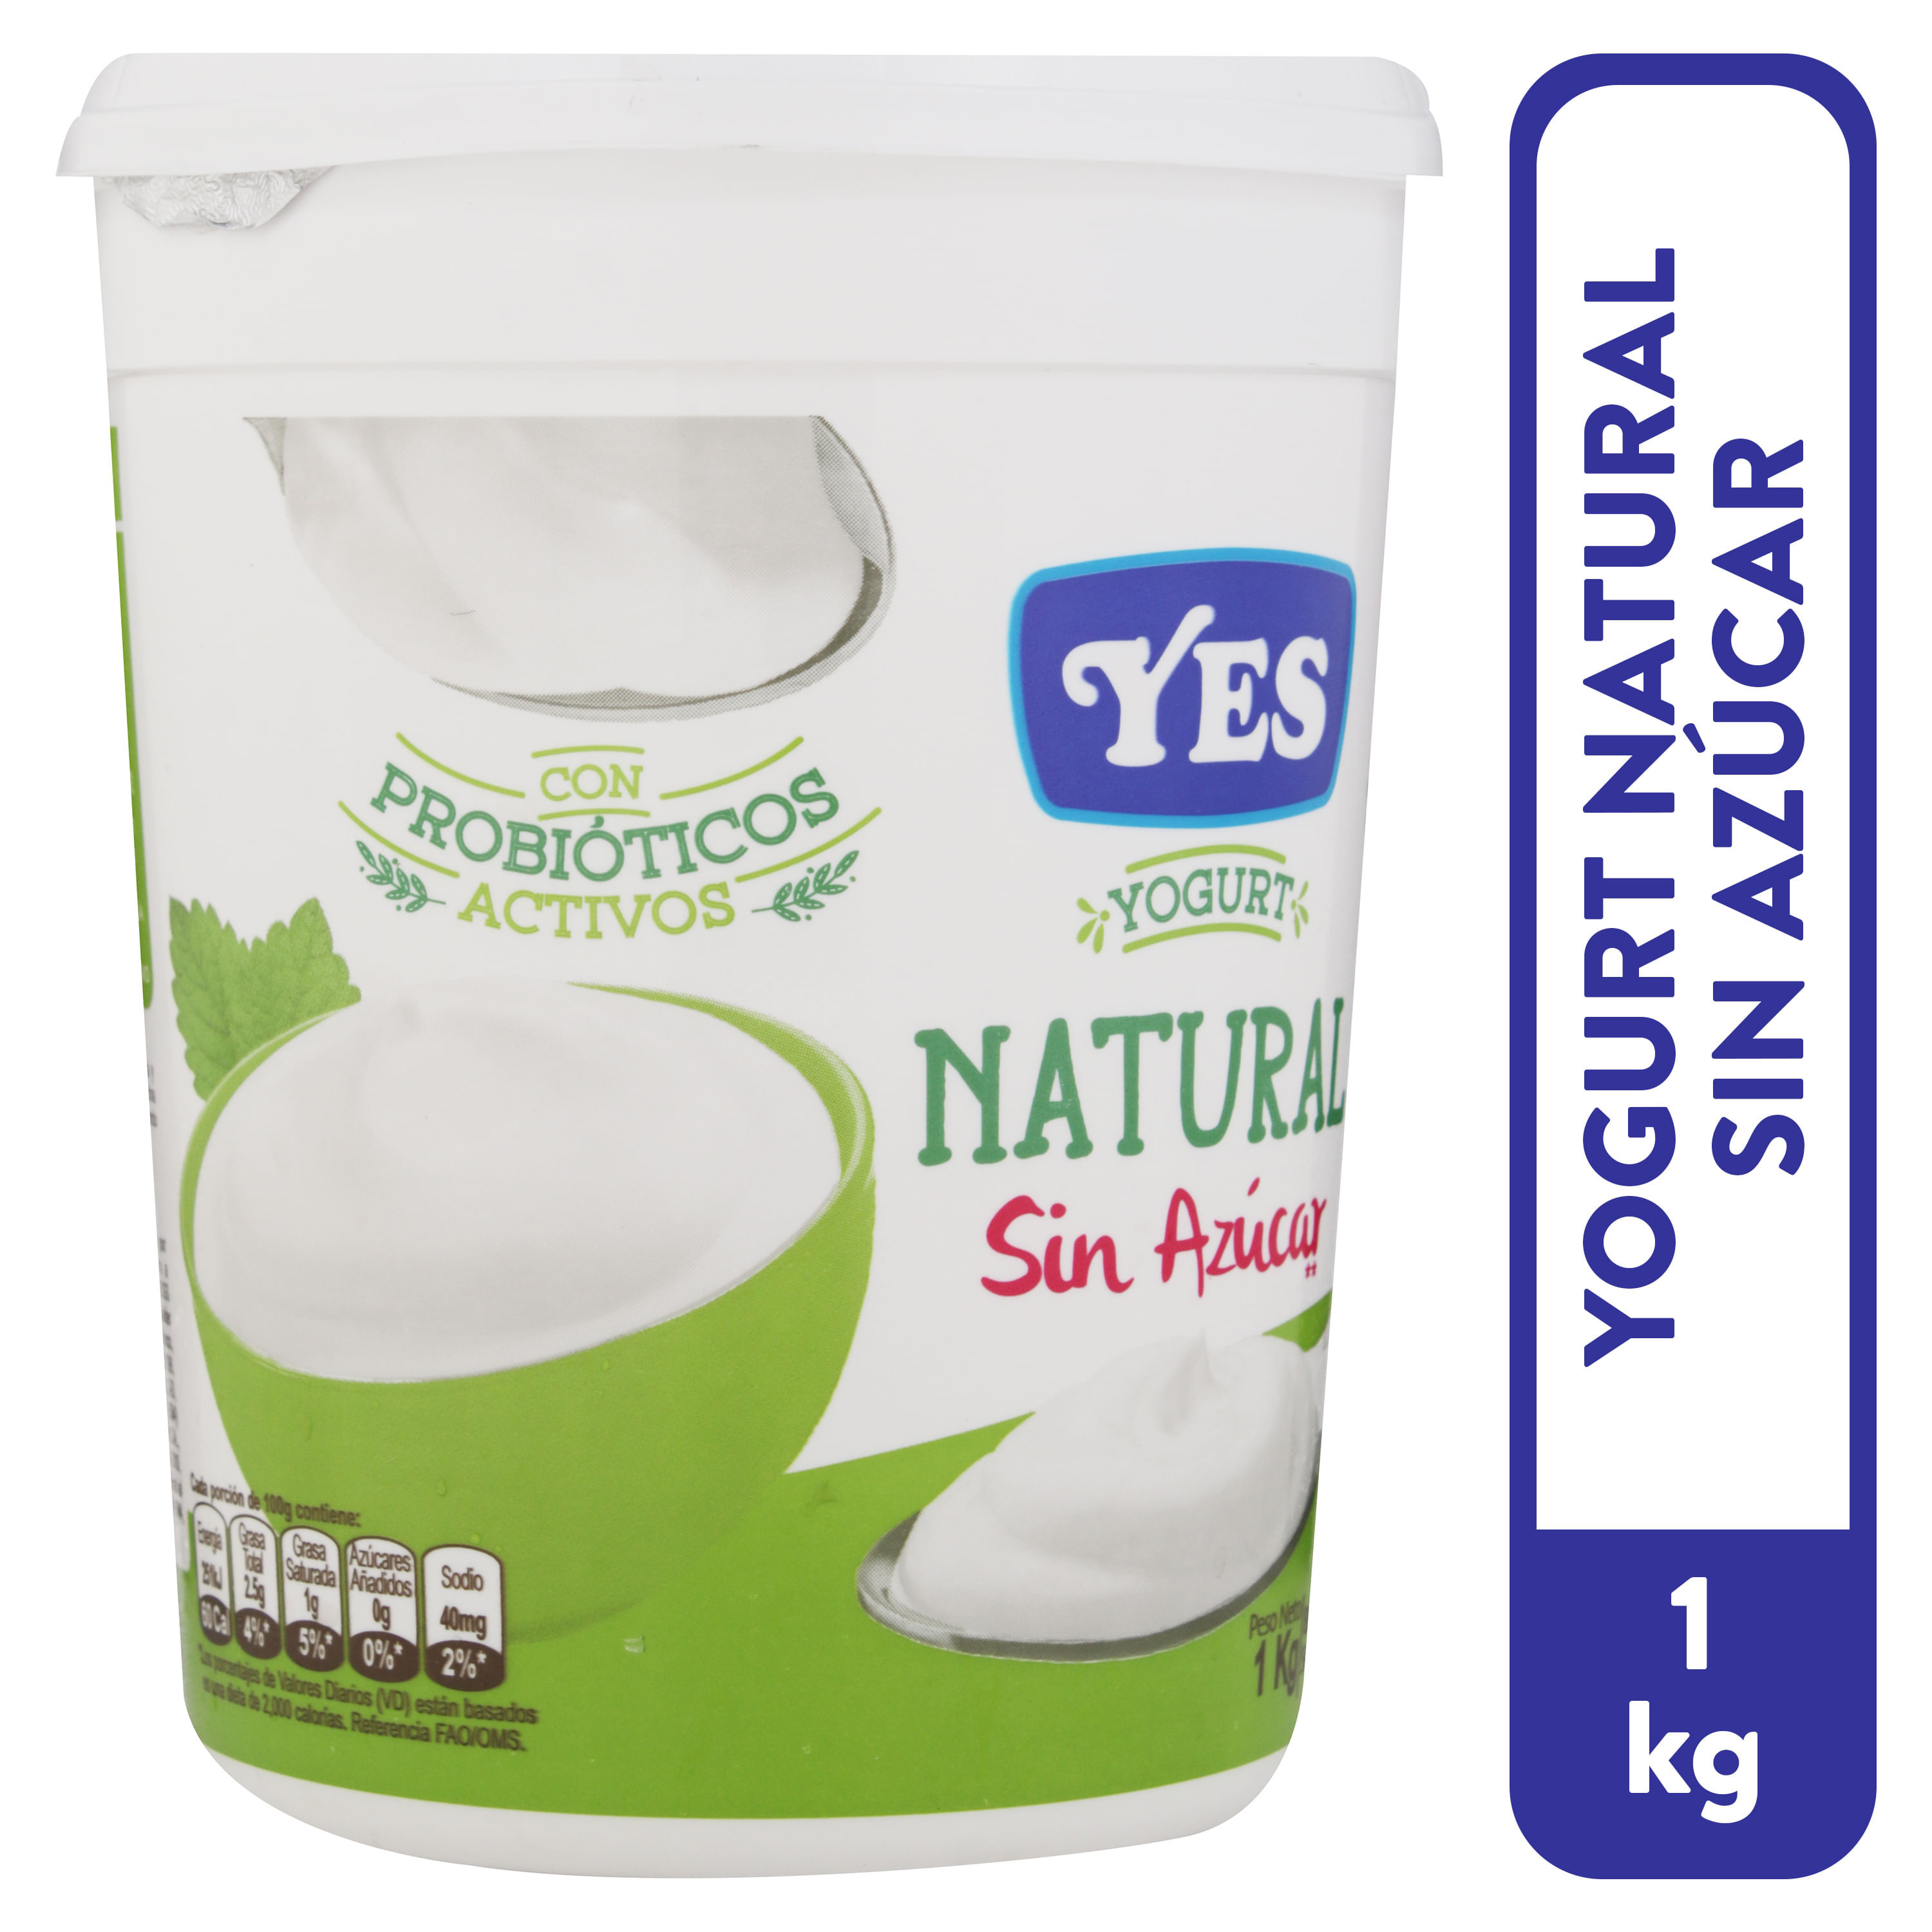 Yogurt-Yes-Cremoso-Natural-Sin-Az-car-1kg-1-3695